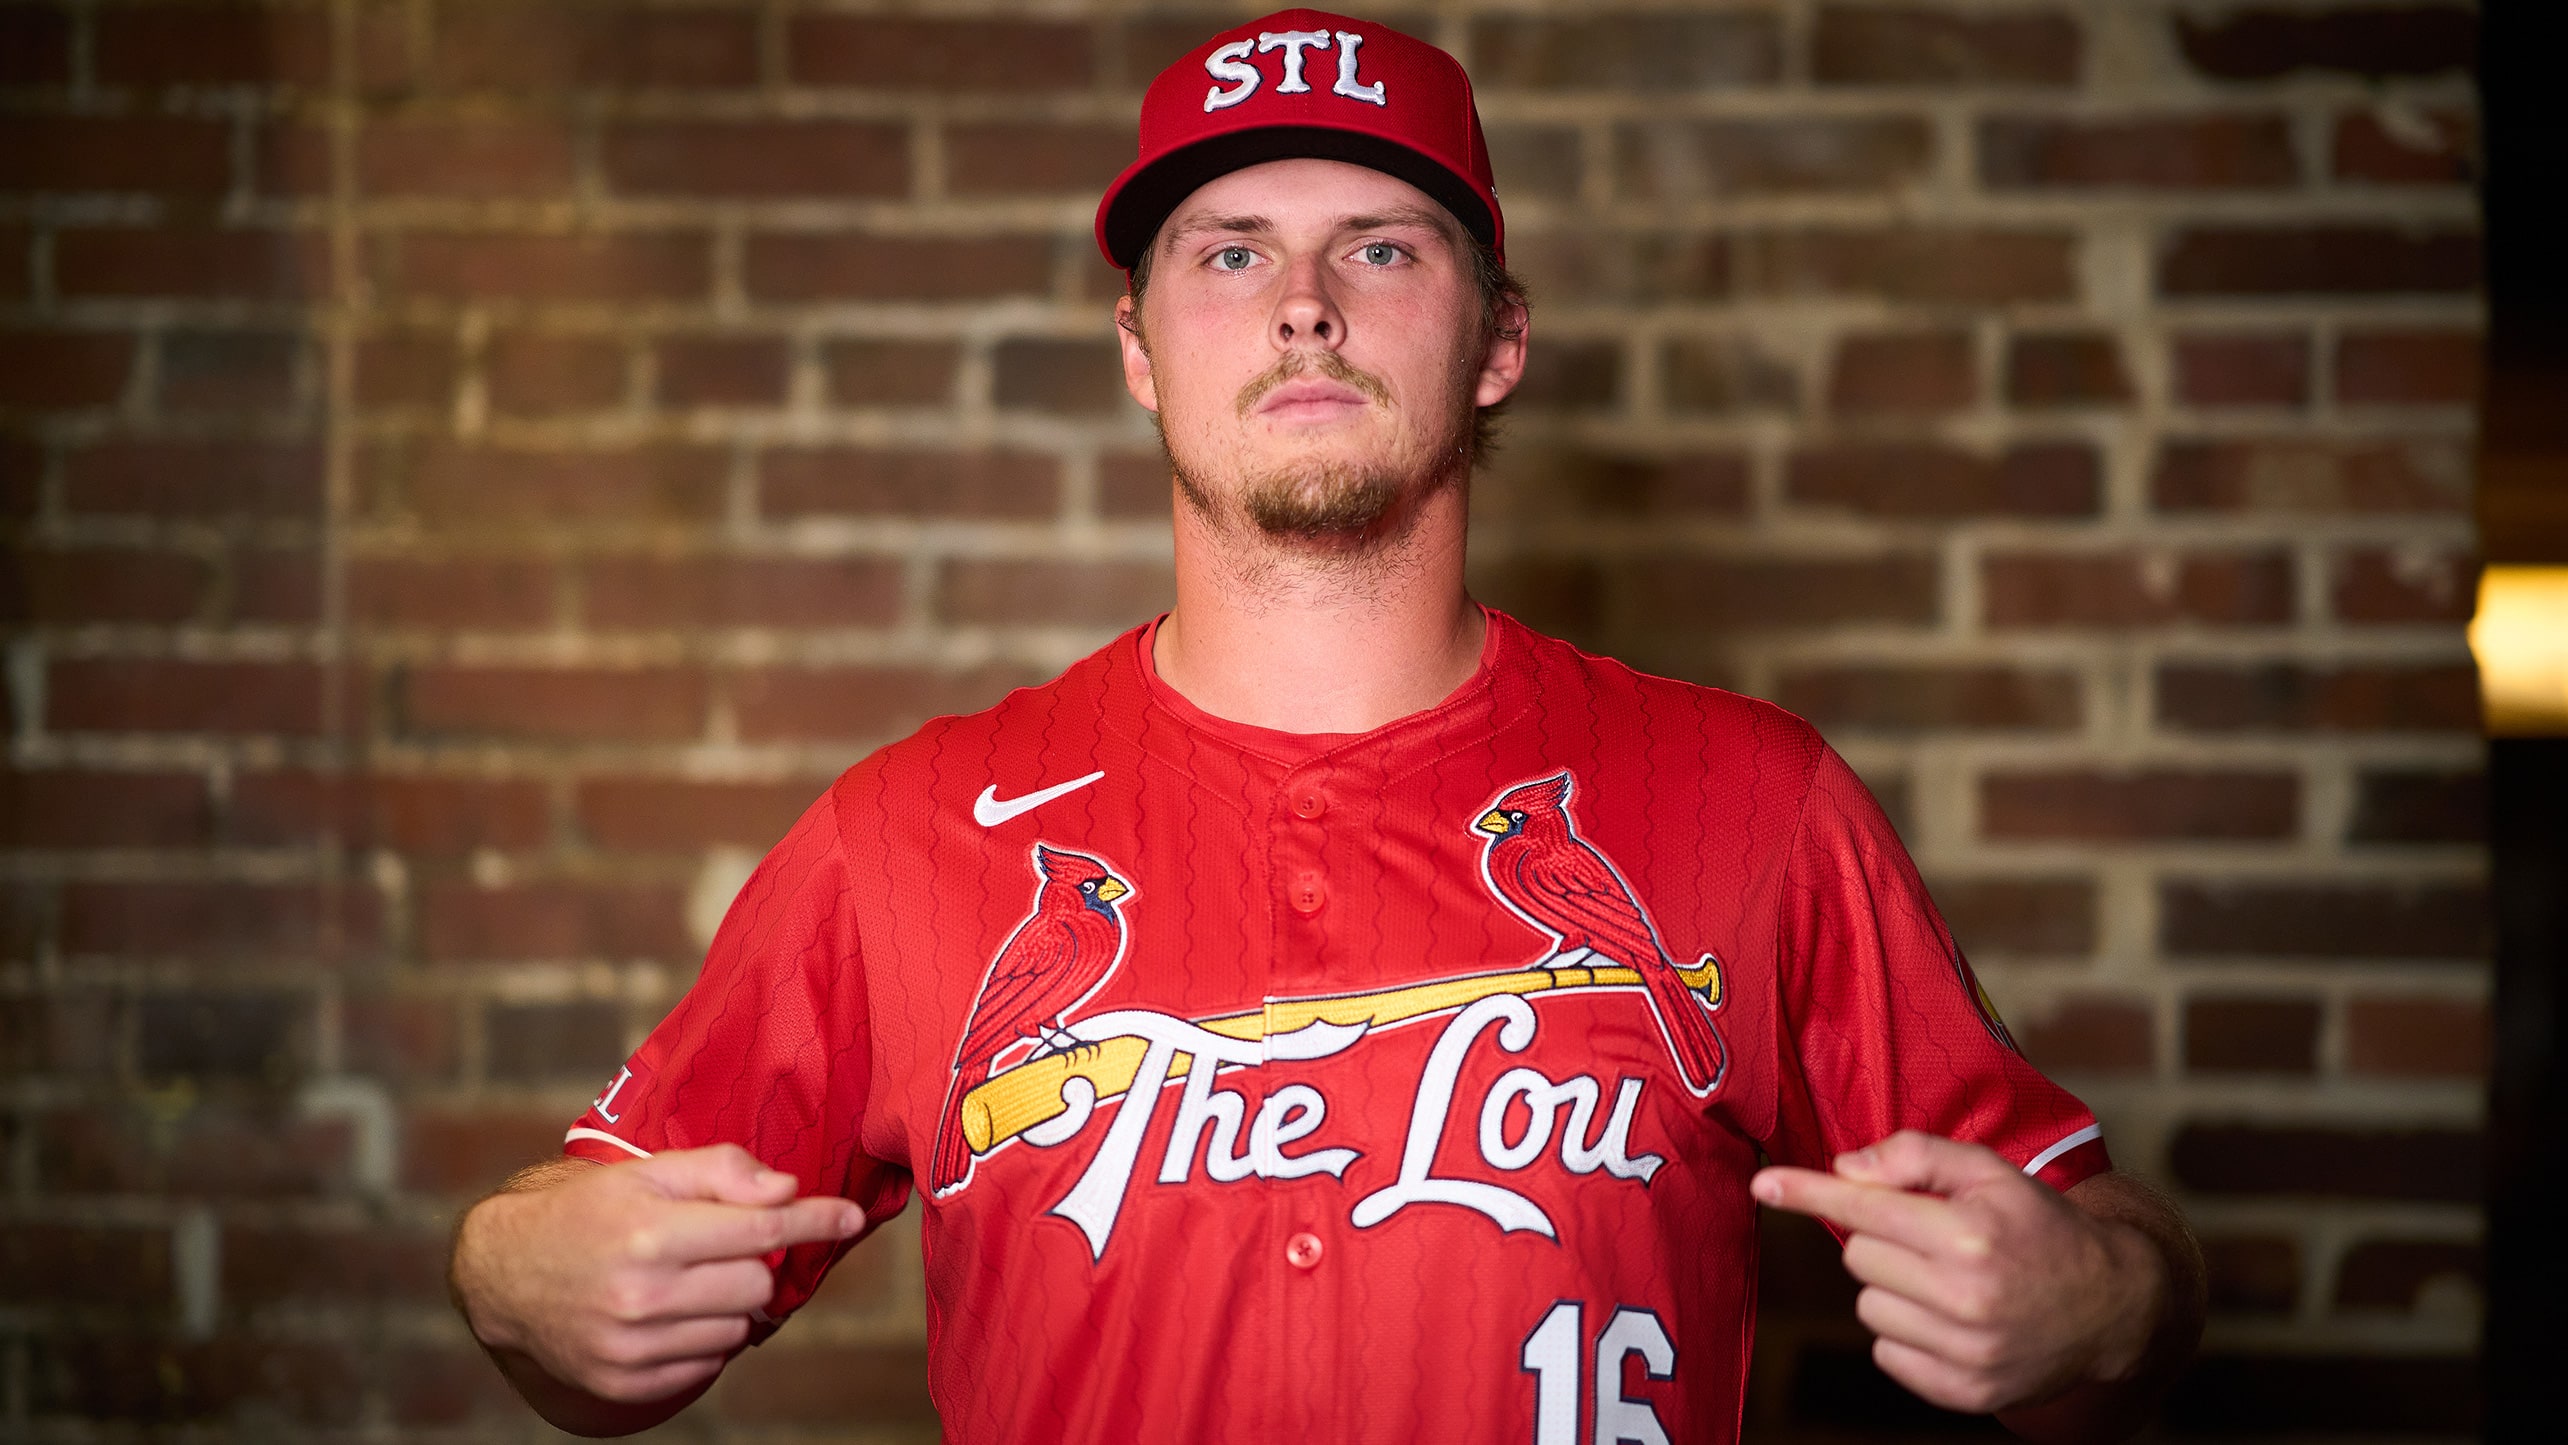 Nolan Gorman sports the Cardinals' new City Connect uniform